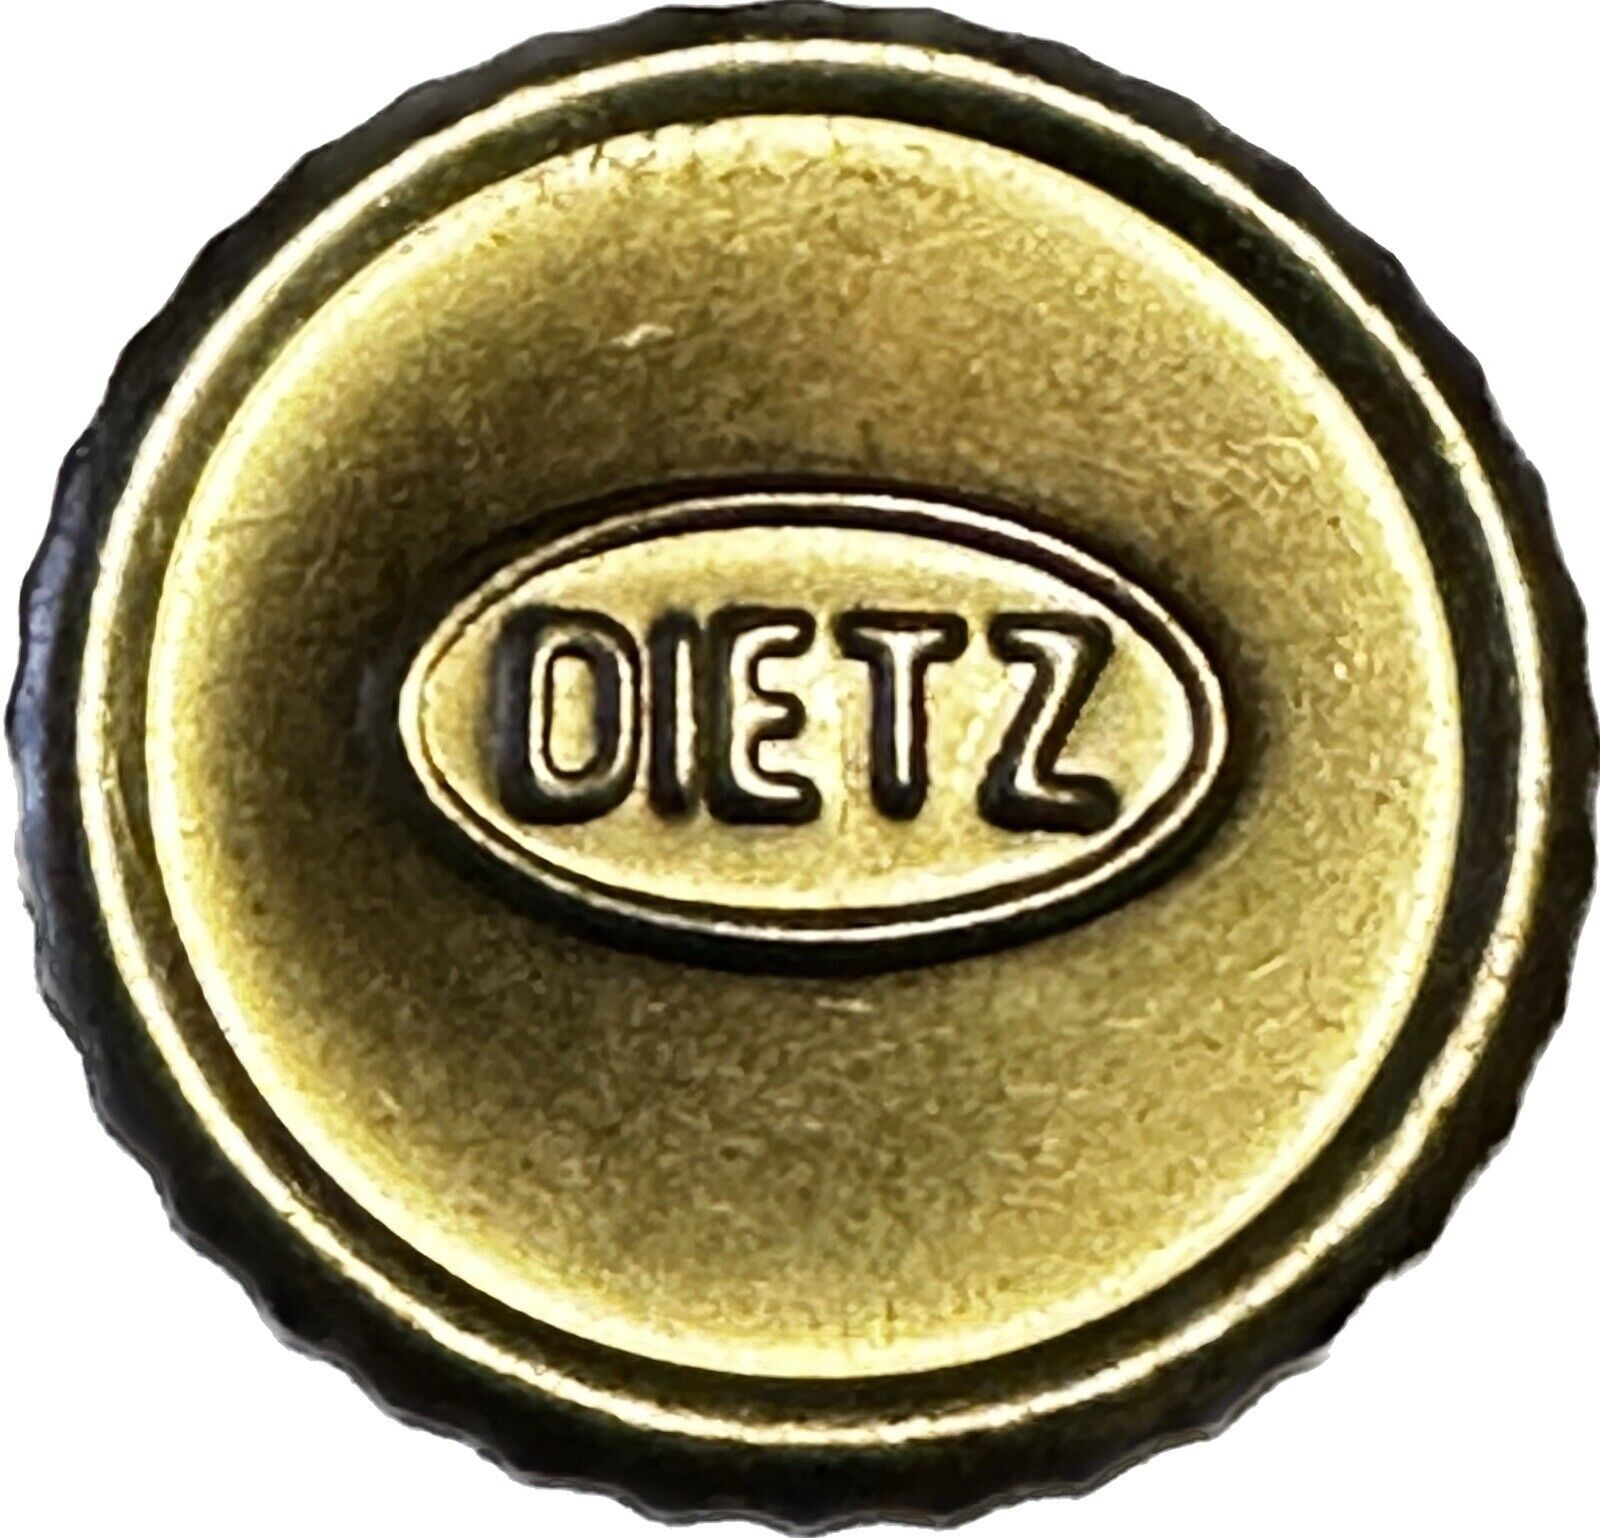 Genuine DIETZ Kerosene Oil Lantern Replacement Fuel Cap Gold, with Logo